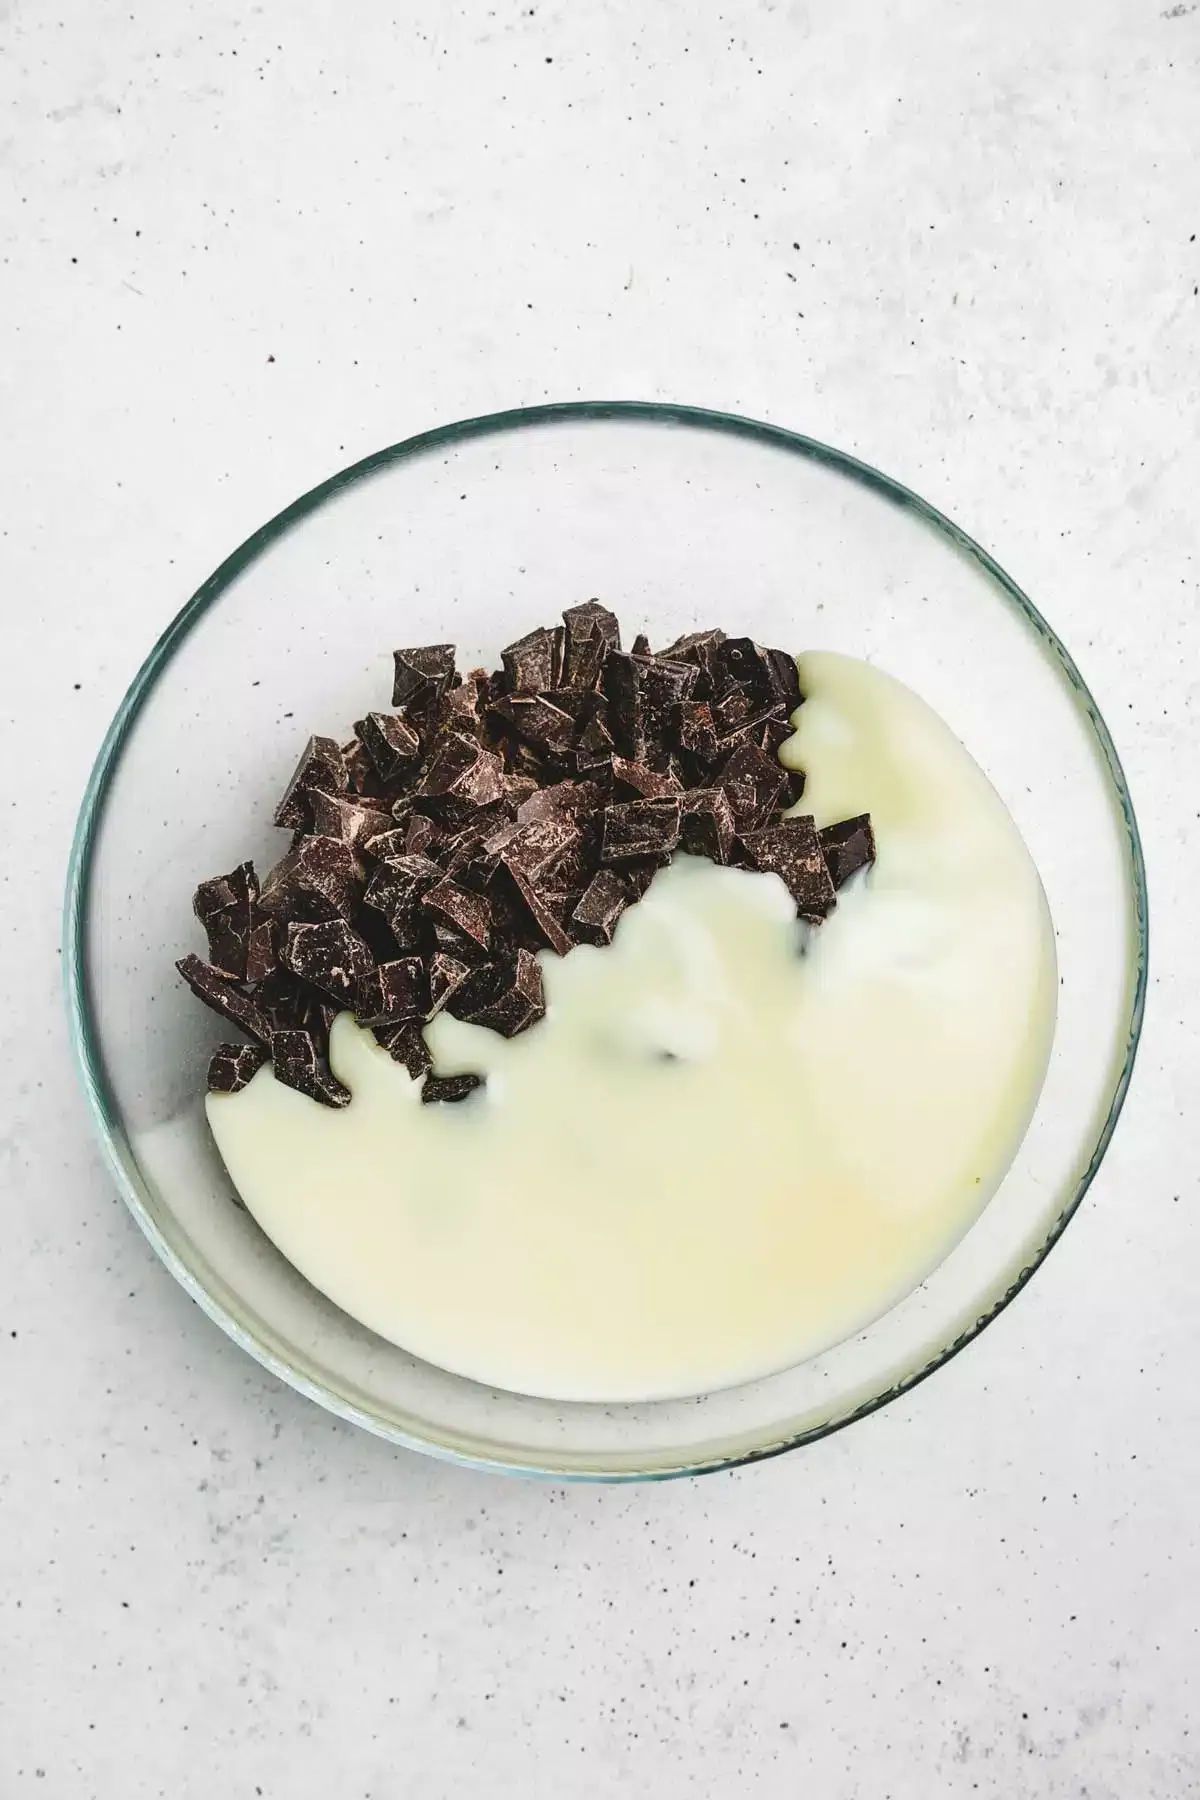 Medium bowl with chocolate and condensed milk